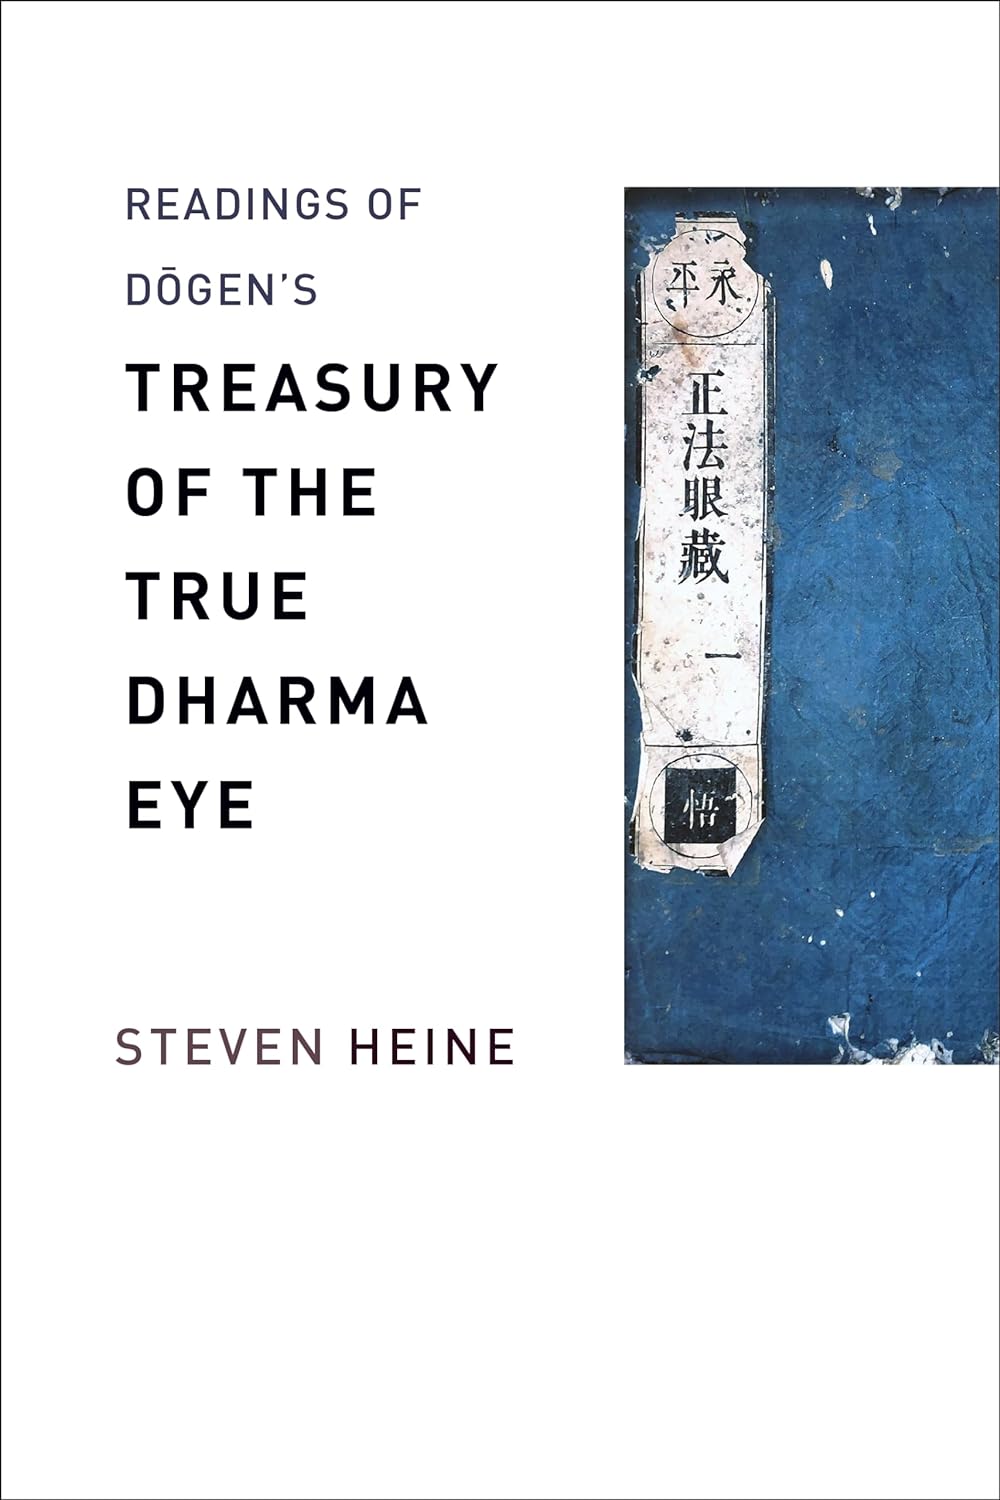 Steven Heine: Readings of Dogen's Treasury of the True Dharma Eye (2020, Columbia University Press)